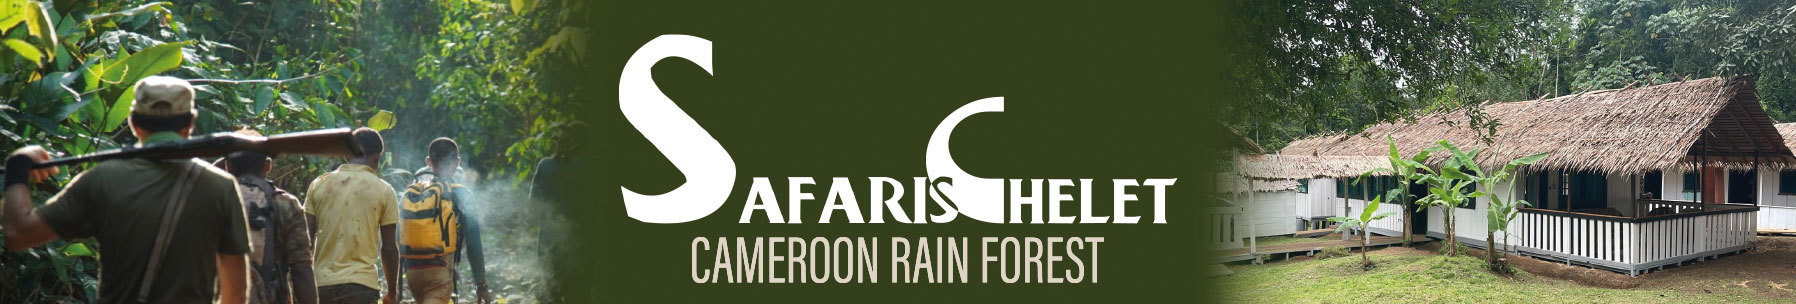 CHELET SAFARIS CAMEROON RAIN FOREST